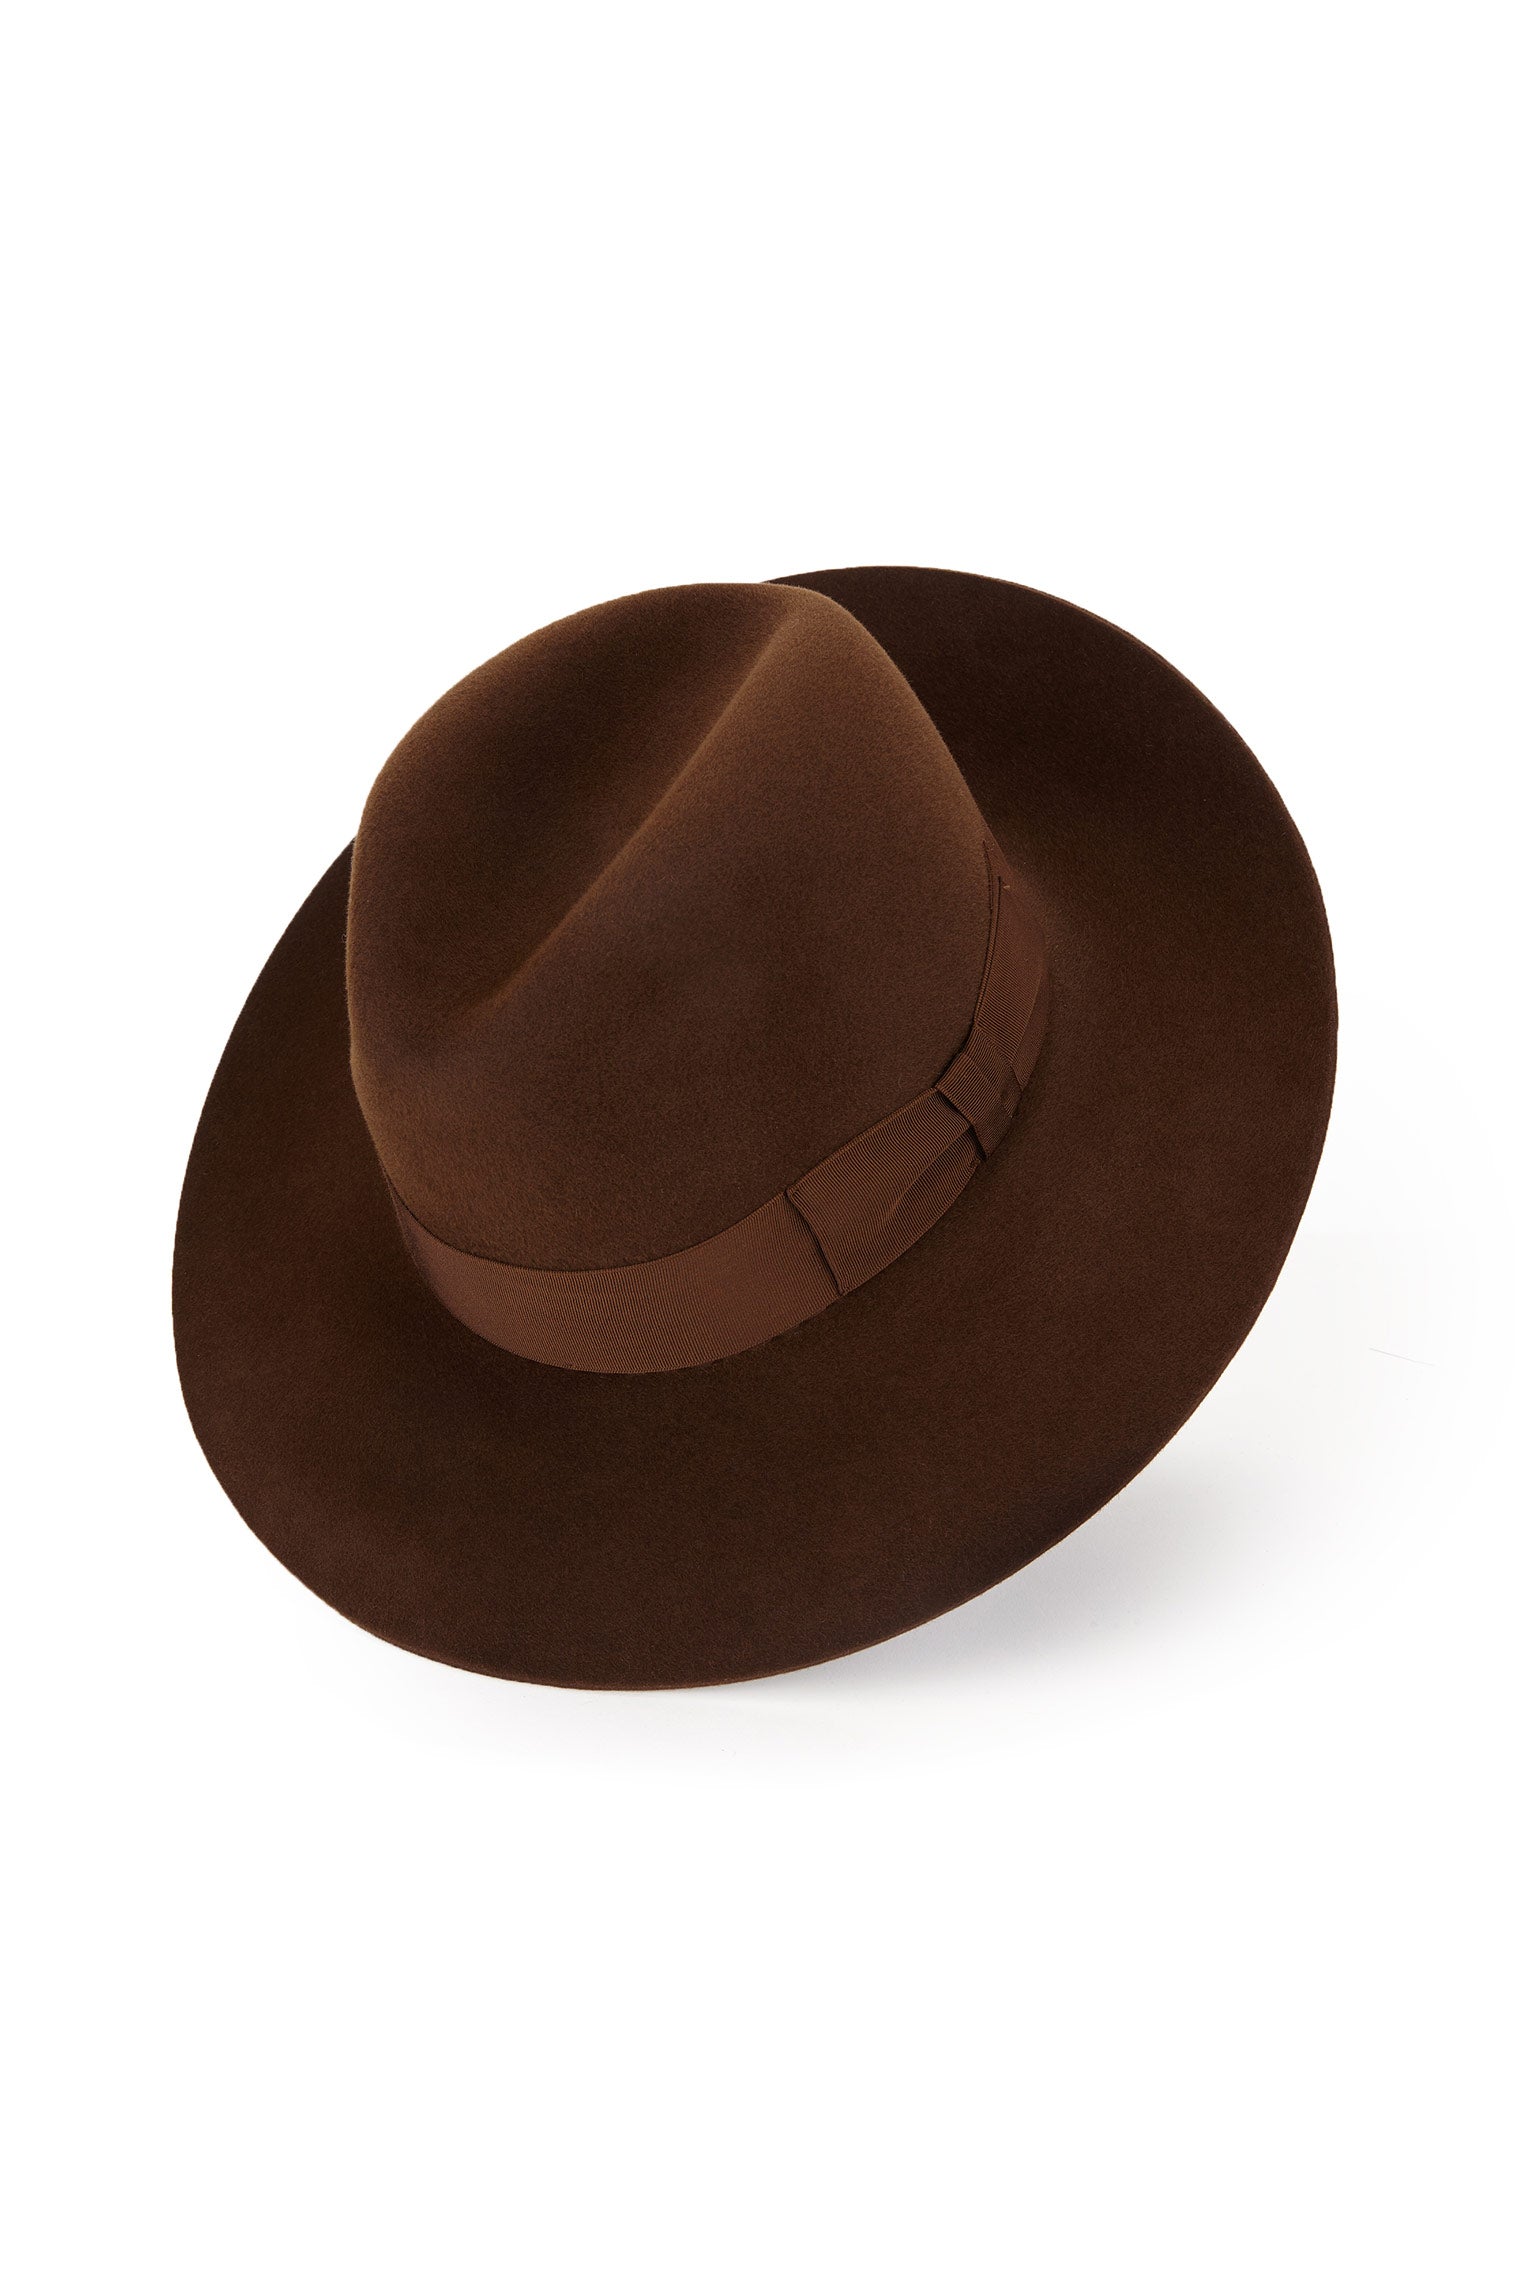 Louisiana Fedora - Hats for Tall People - Lock & Co. Hatters London UK